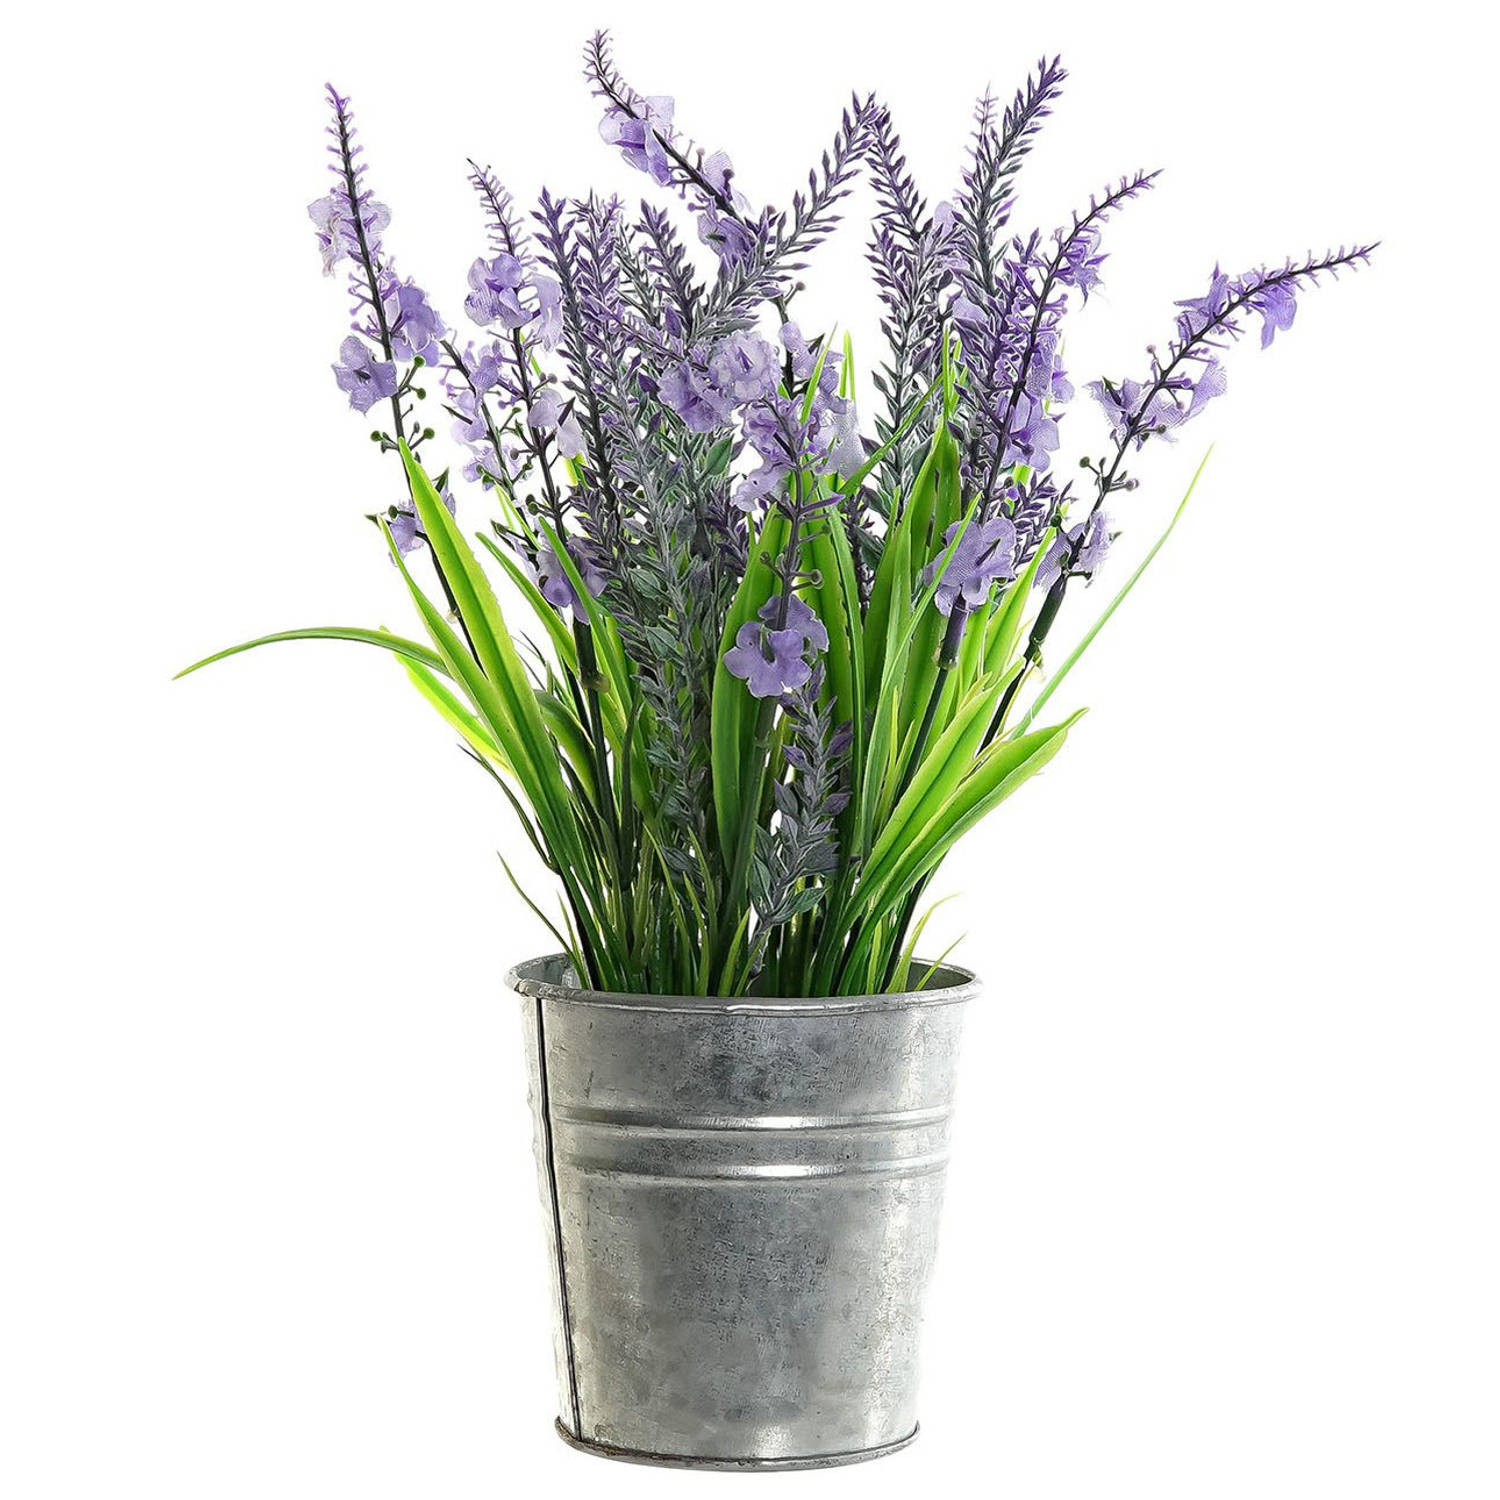 Lavendel kunstplant/kamerplant paars in grijze sierpot H28 cm x D18 cm - Kunstplanten